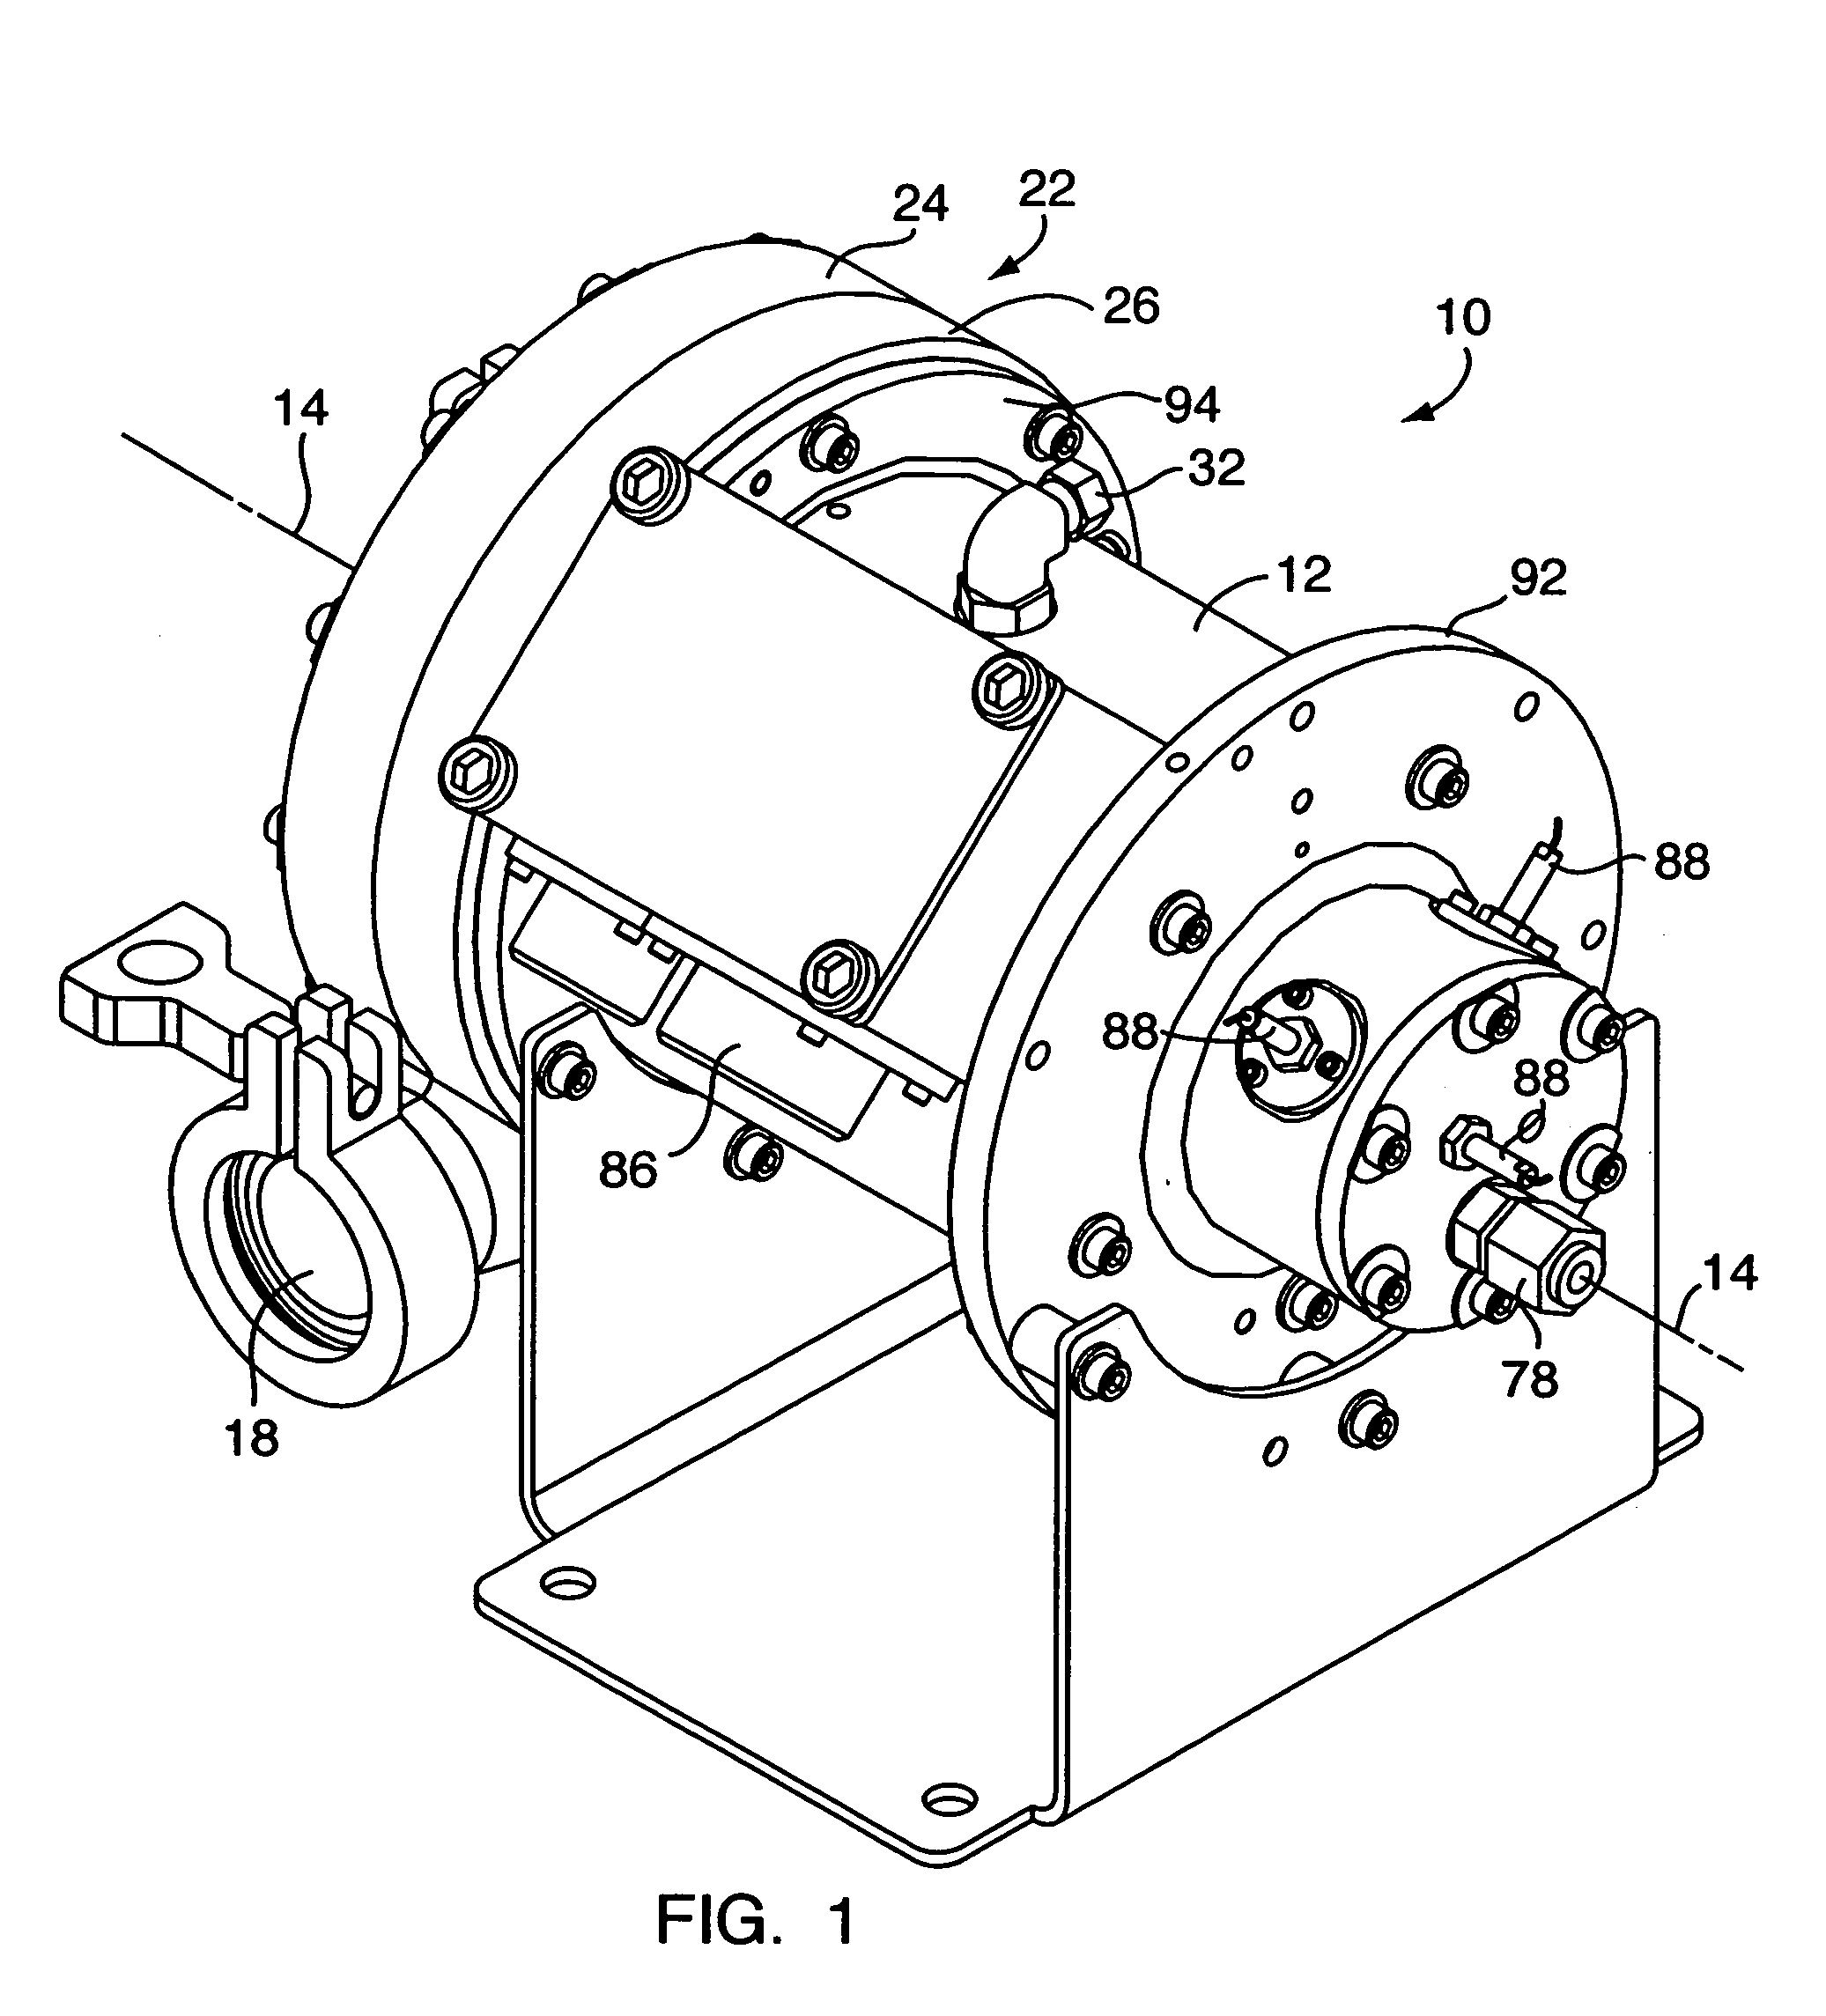 Motor driven centrifugal compressor/blower